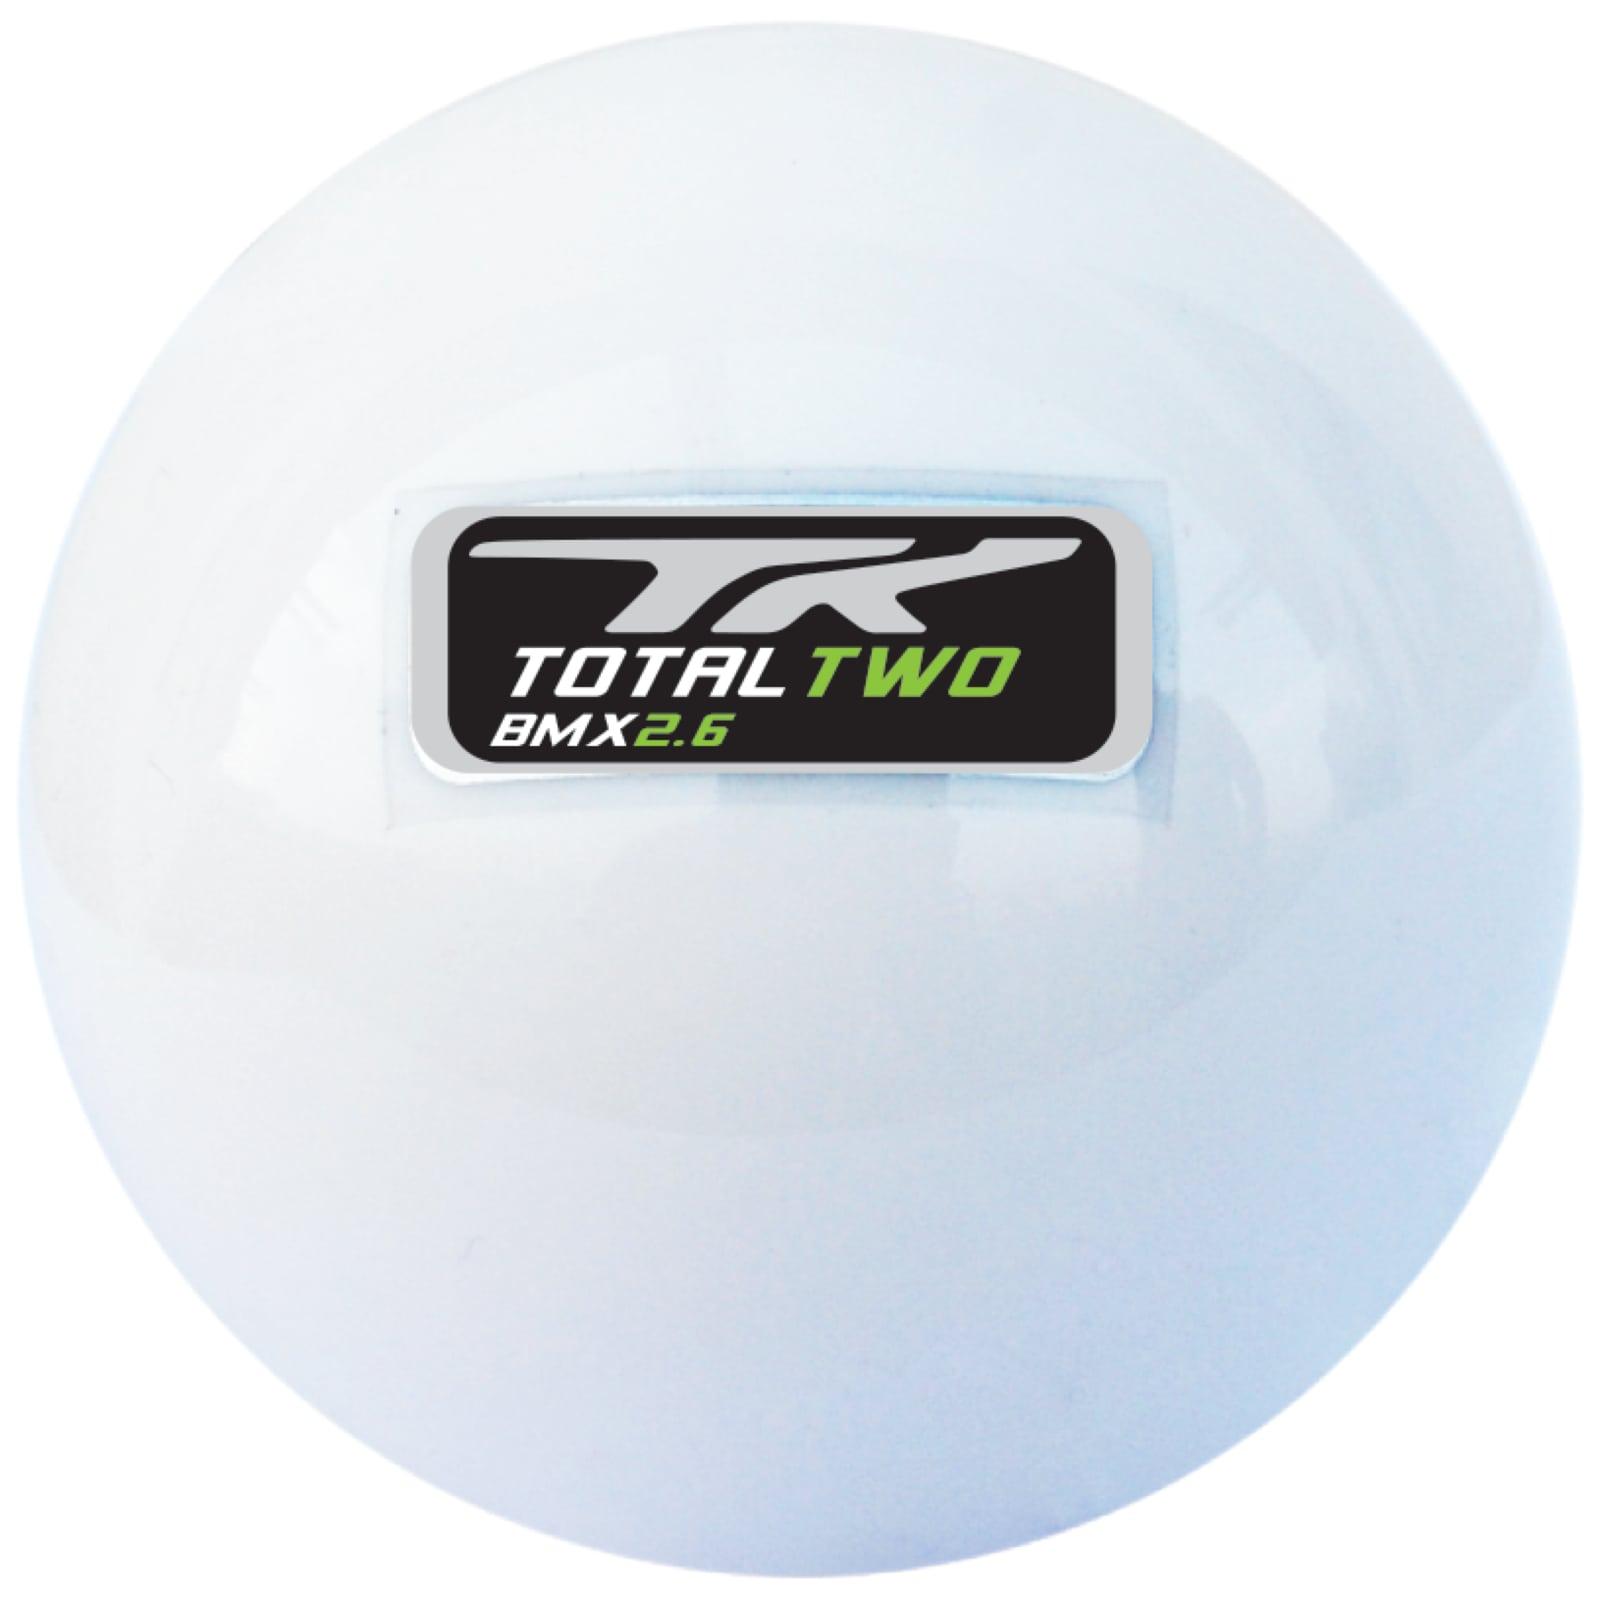 2 Hands -On Ball Logo - TK TOTAL TWO BMX 2.6 MINI BALL | TK HockeyTK Hockey